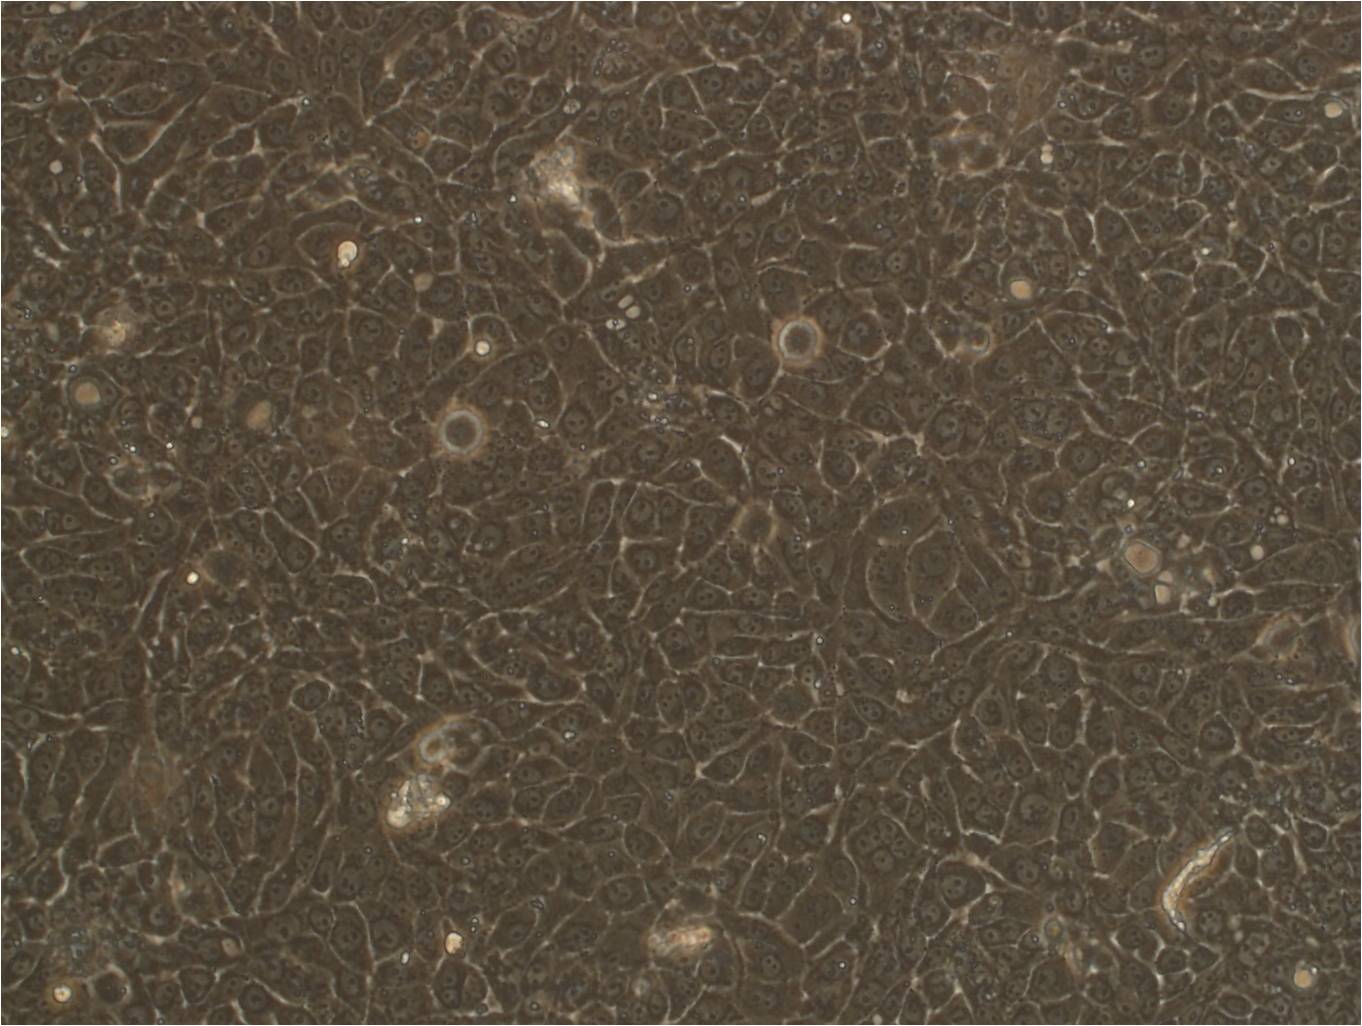 ELD-1 epithelioid cells人朗格汉斯细胞型树突状细胞系